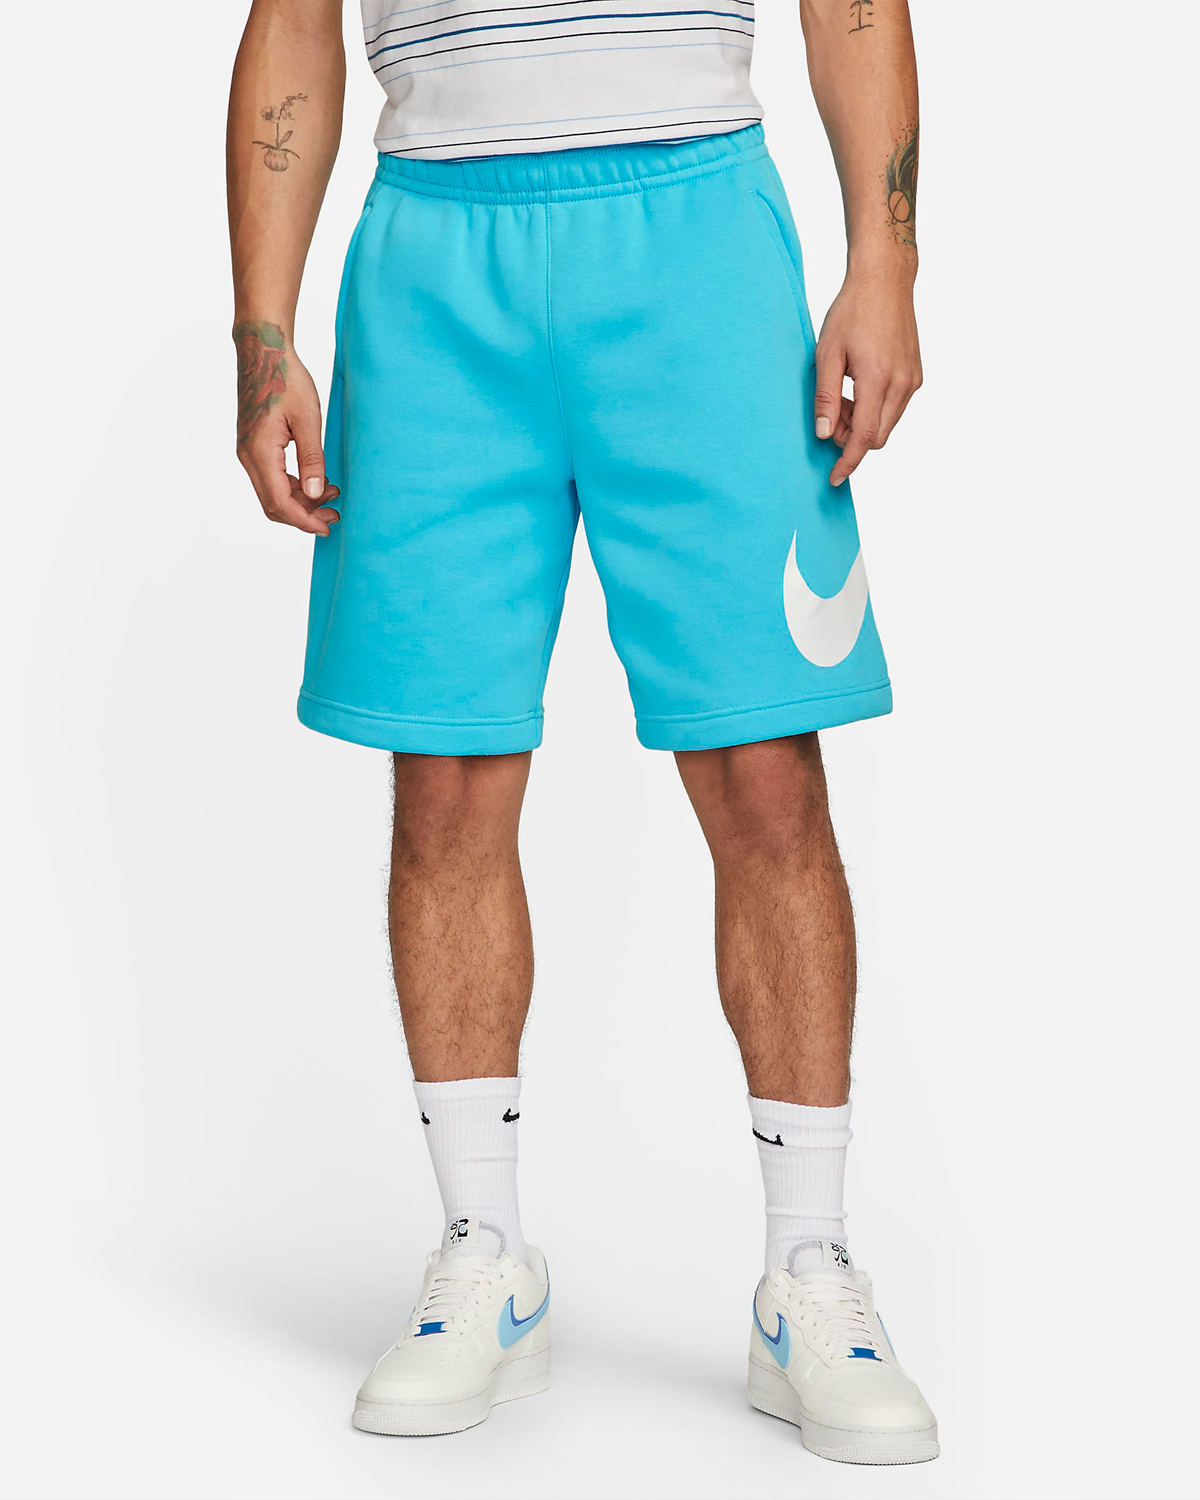 Nike Sportswear Baltic Blue Shirts Clothing Sneaker Outfits